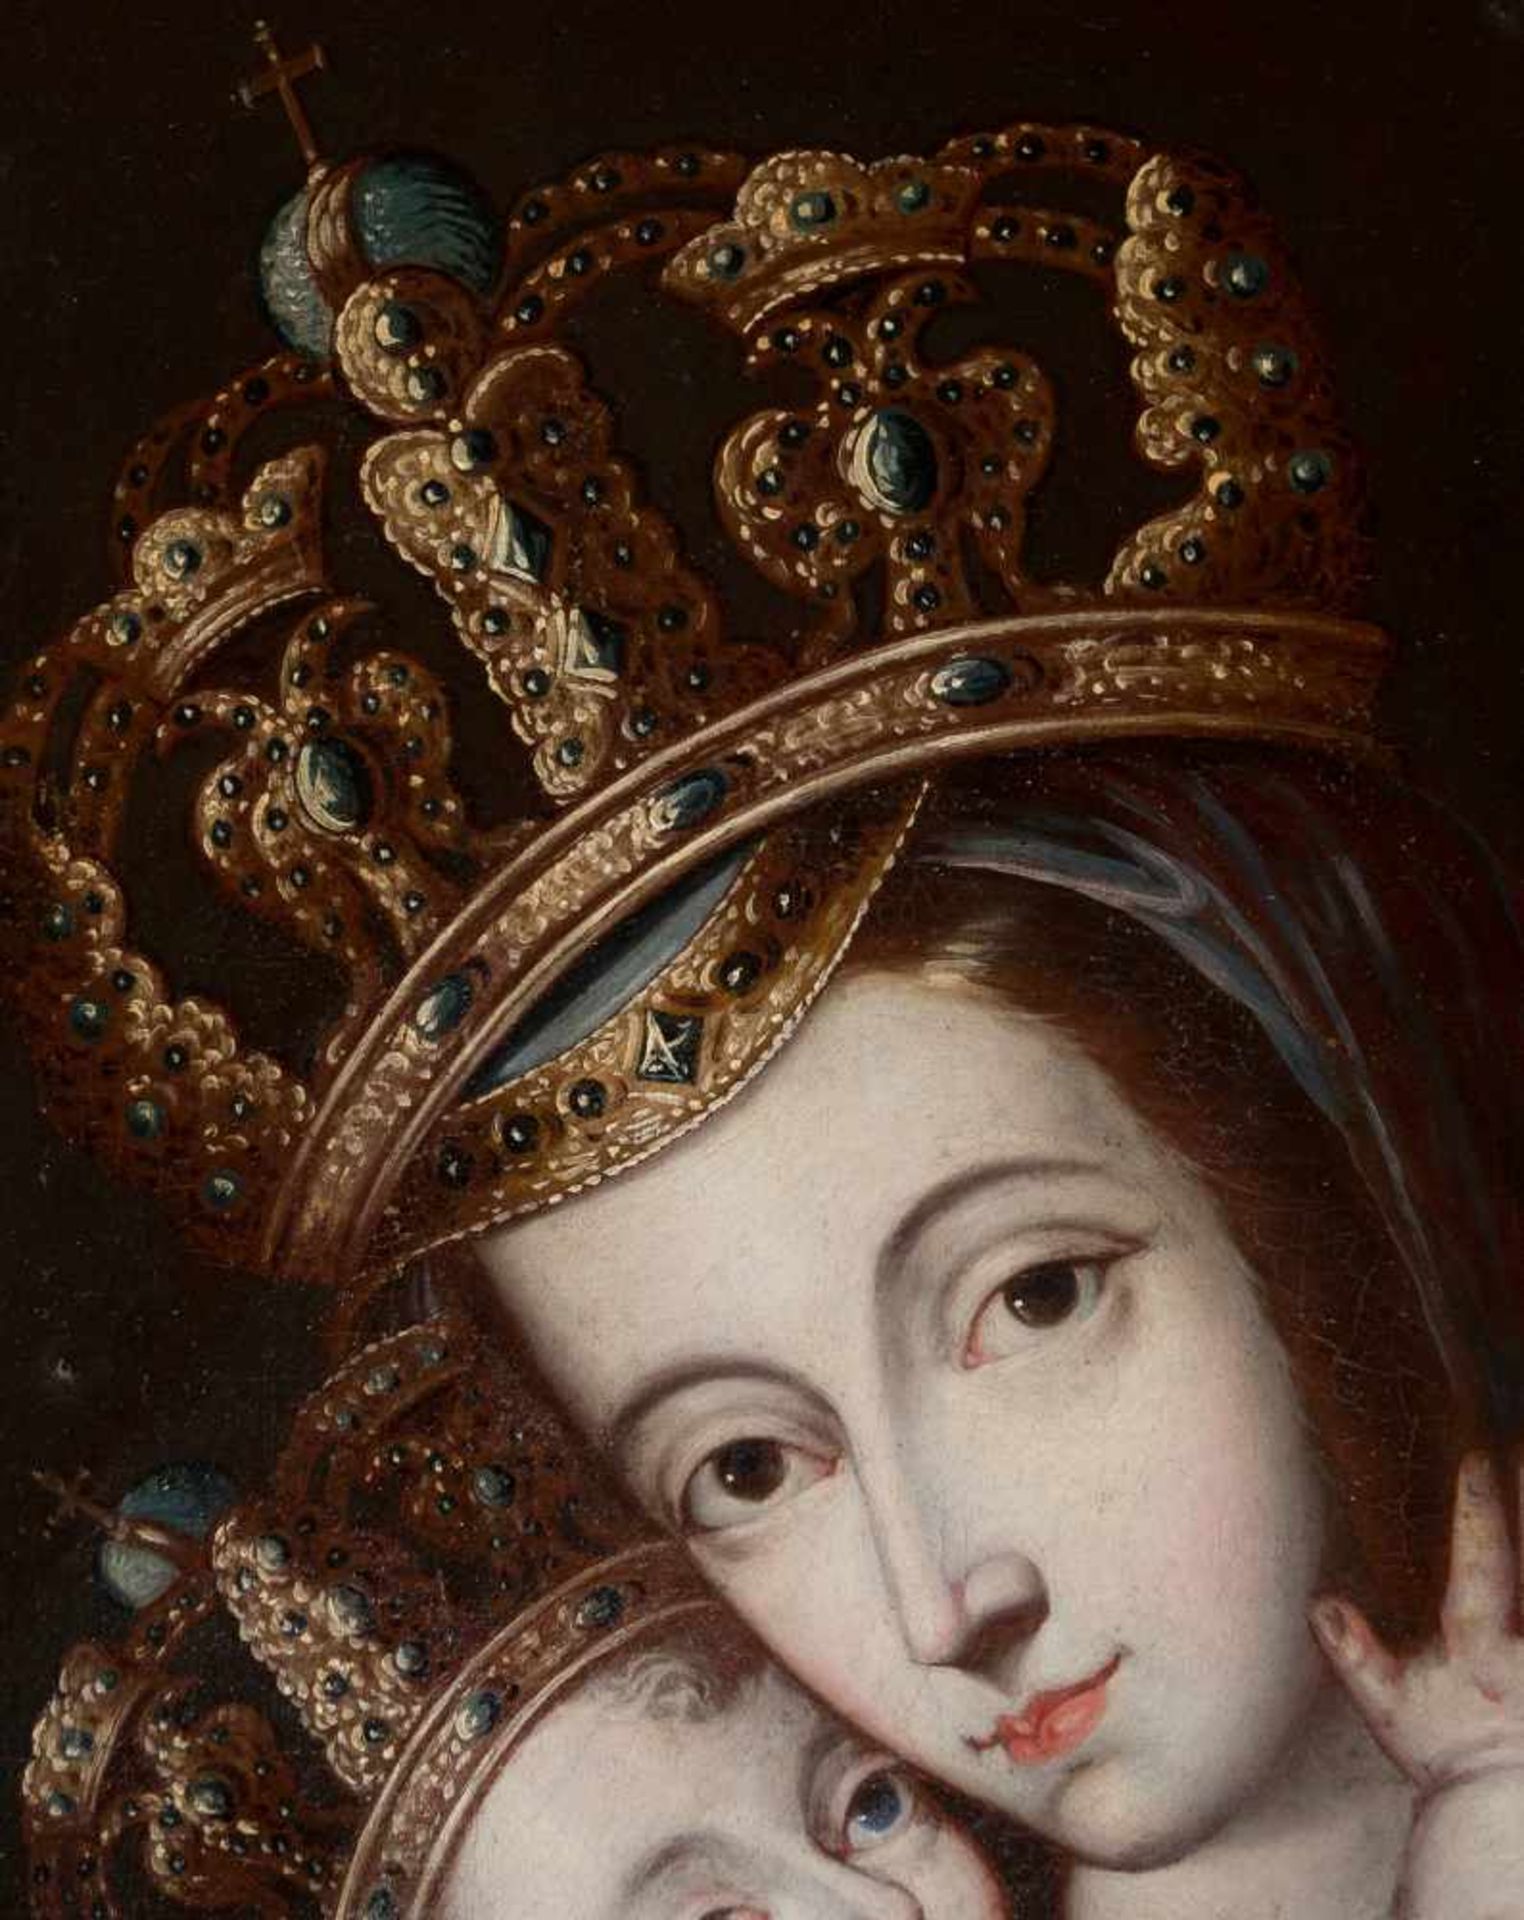 José de Arellano (Madrid, 1653 - 1714) "Madonna and Child" Oil on canvas. Signed. Circa 1695 - 1700. - Bild 3 aus 4